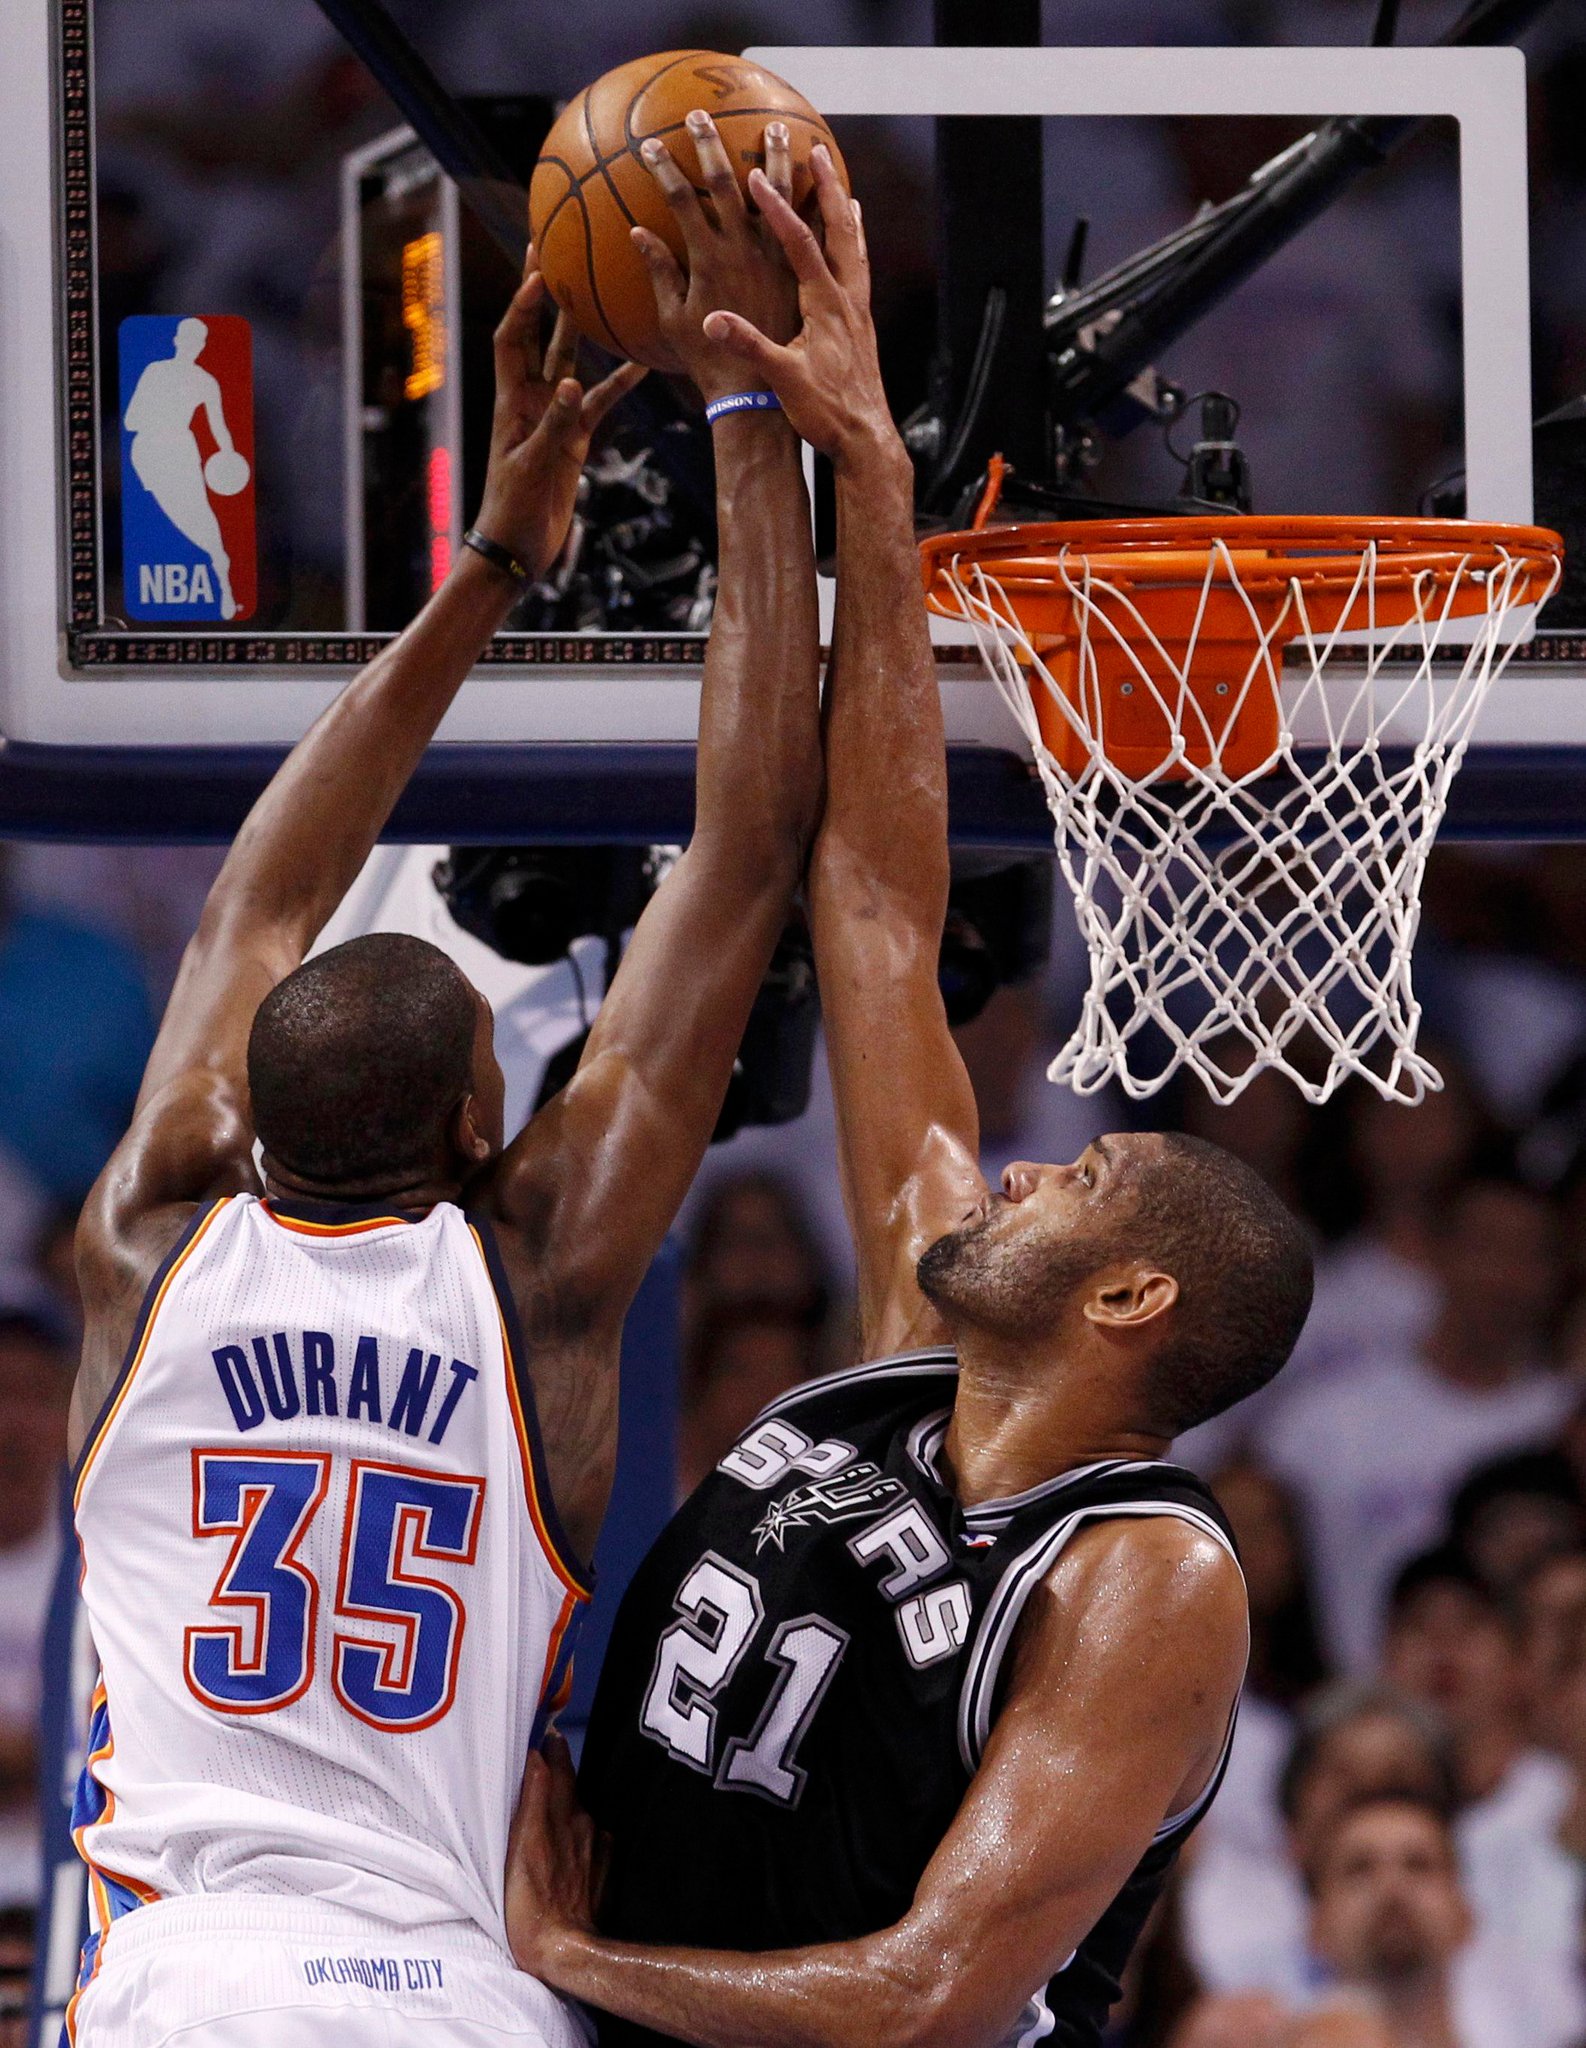 NBA Playoffs 2012 / West / Final / Game 6 / / San Antonio Spurs @ Oklahoma City Thunder  (06.06.2012) SATRip